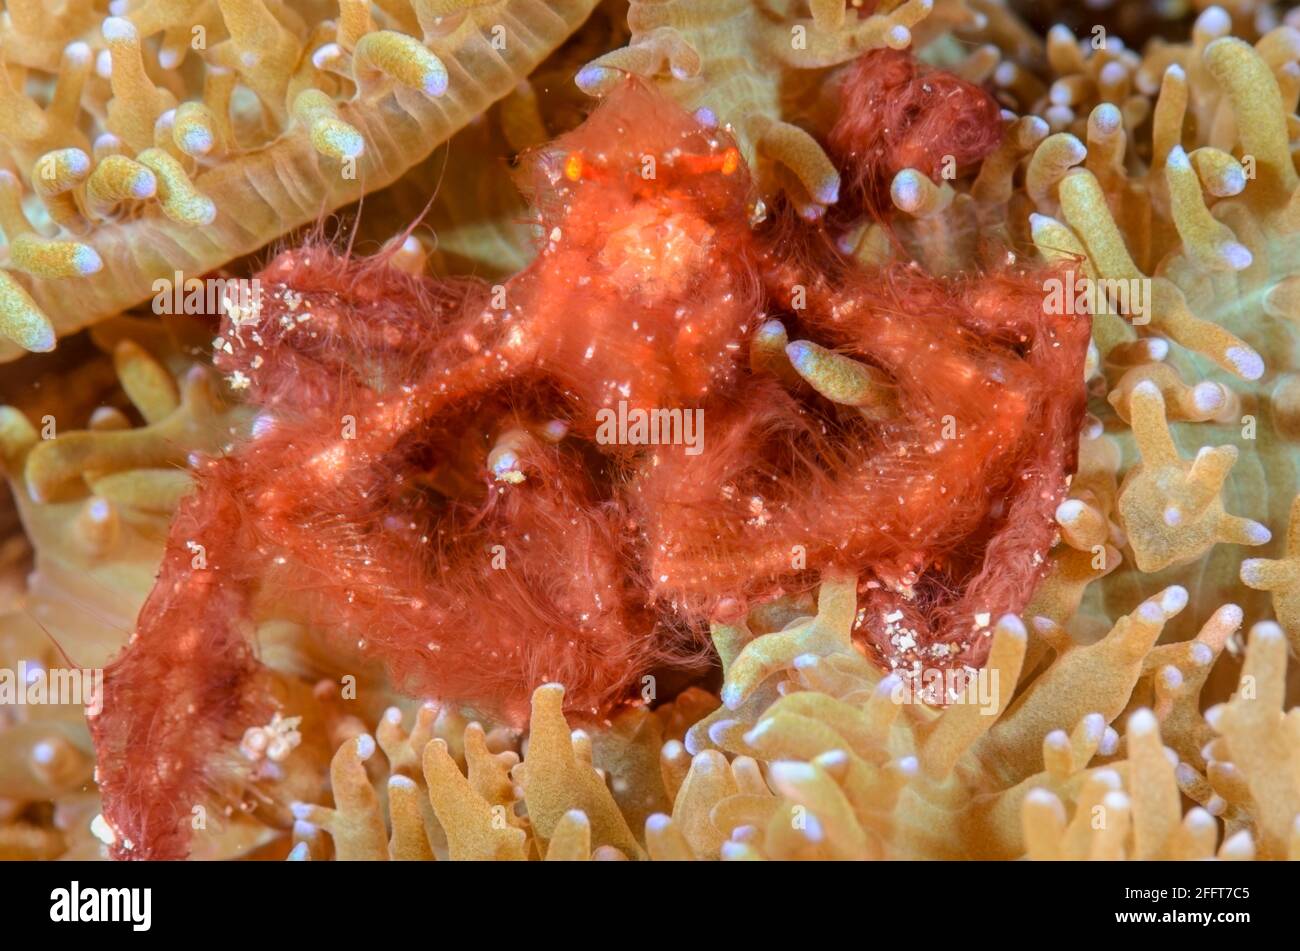 Orangutan crab, Oncinopus sp., Anilao, Batangas, Philippines, Pacific Stock Photo